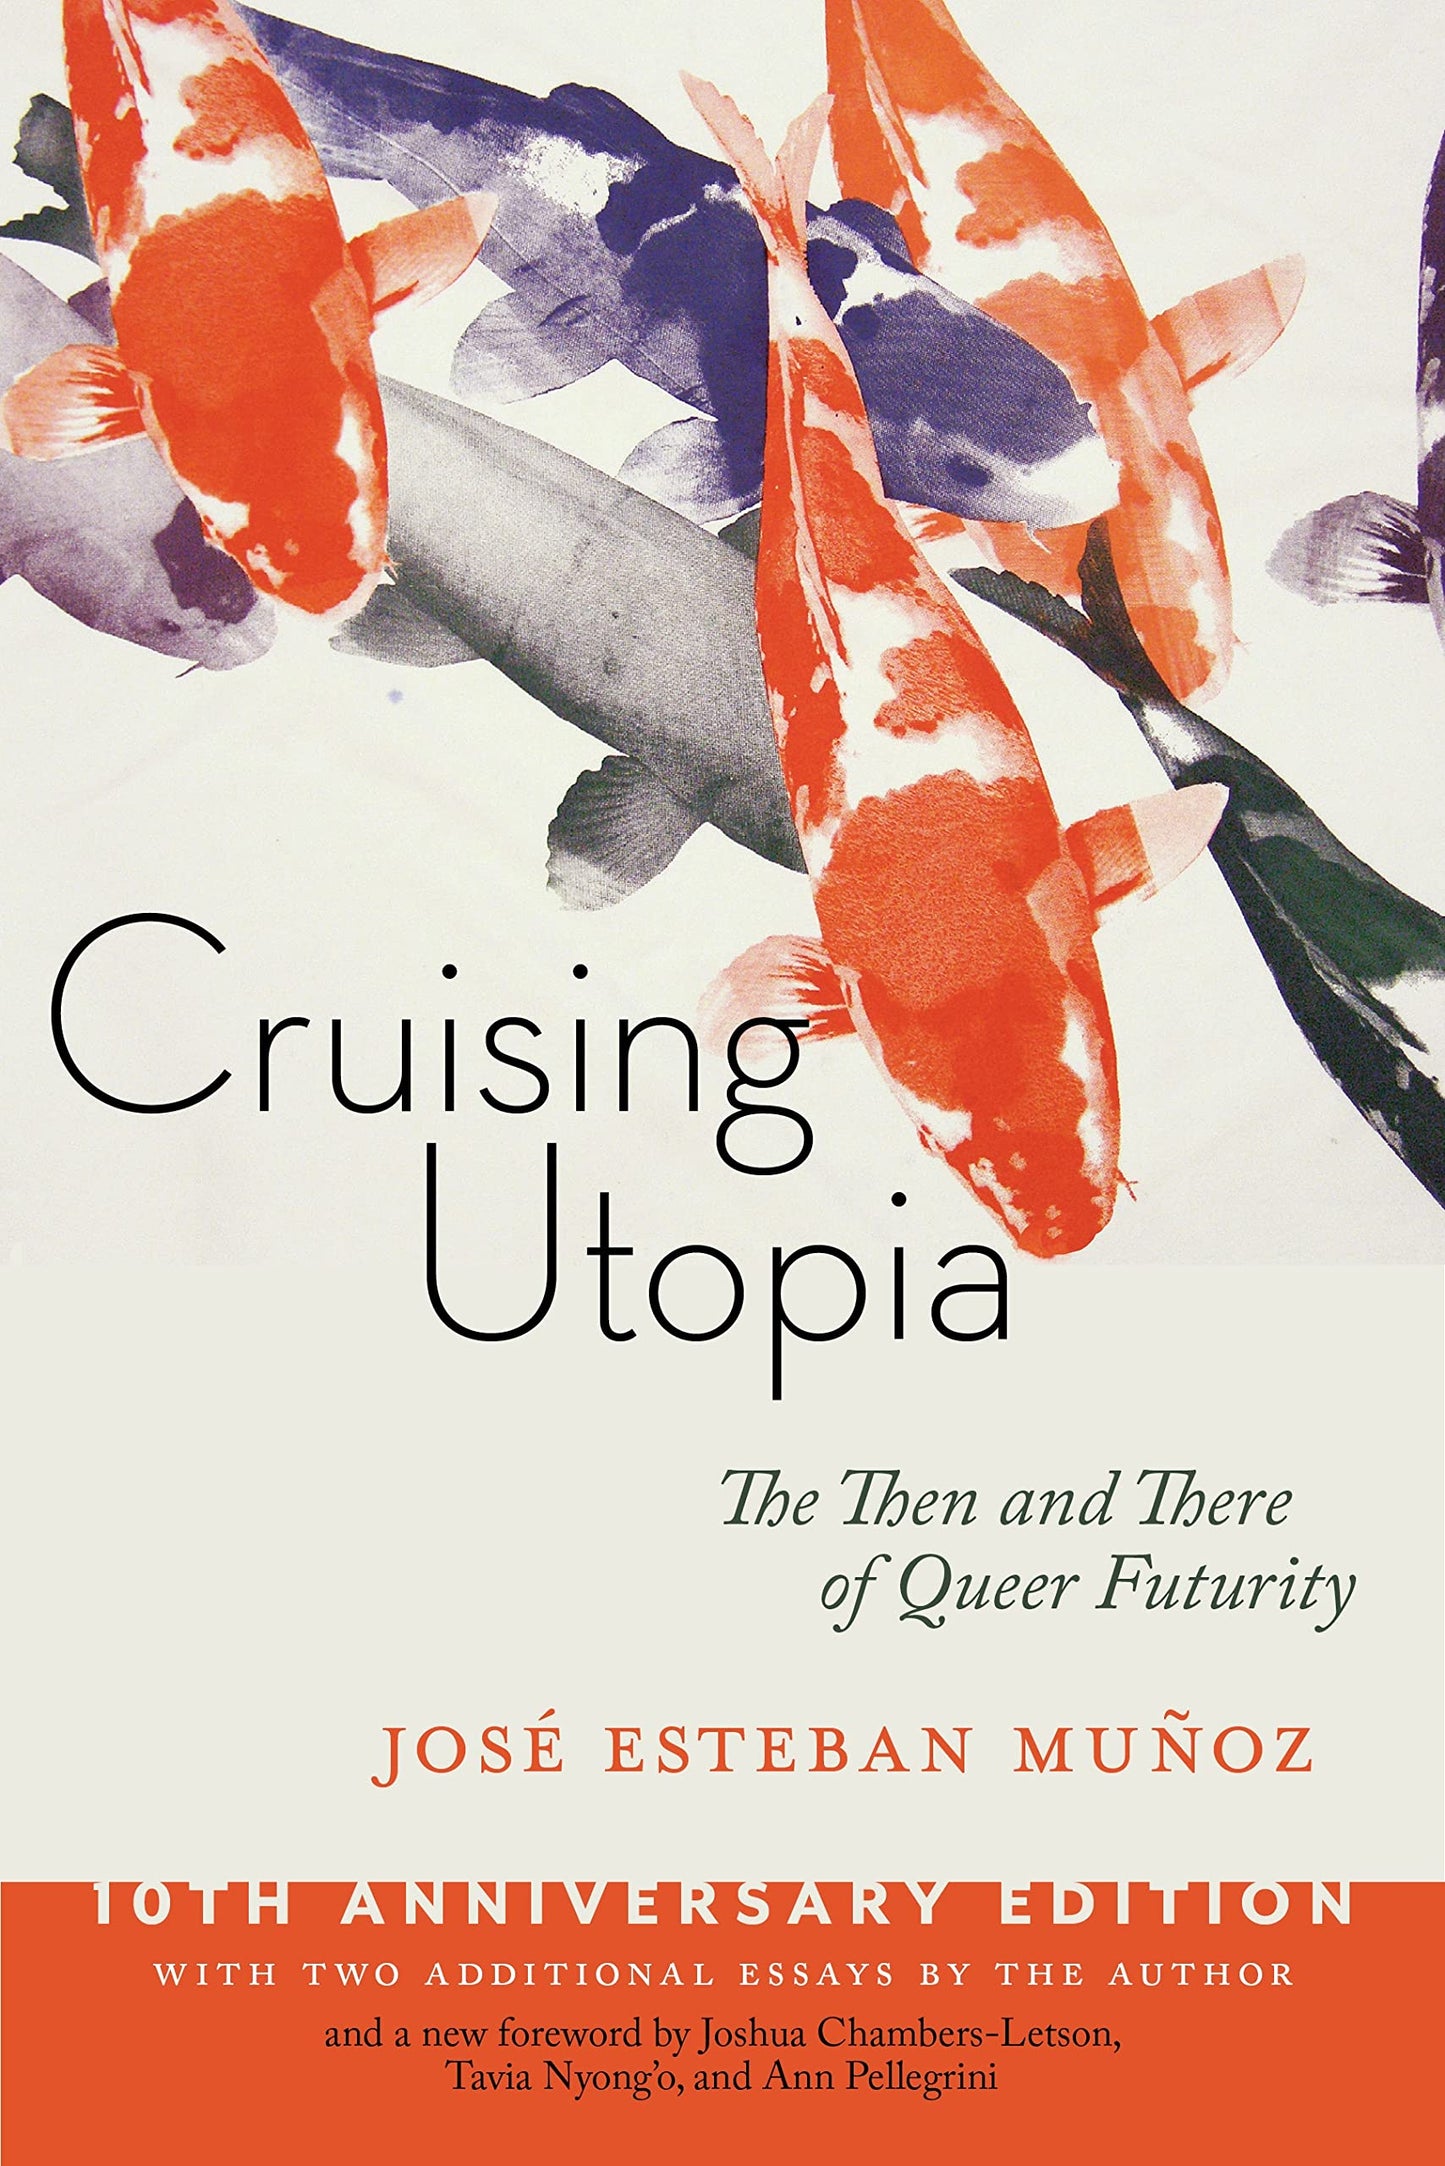 Cruising Utopia, by José Esteban Muñoz